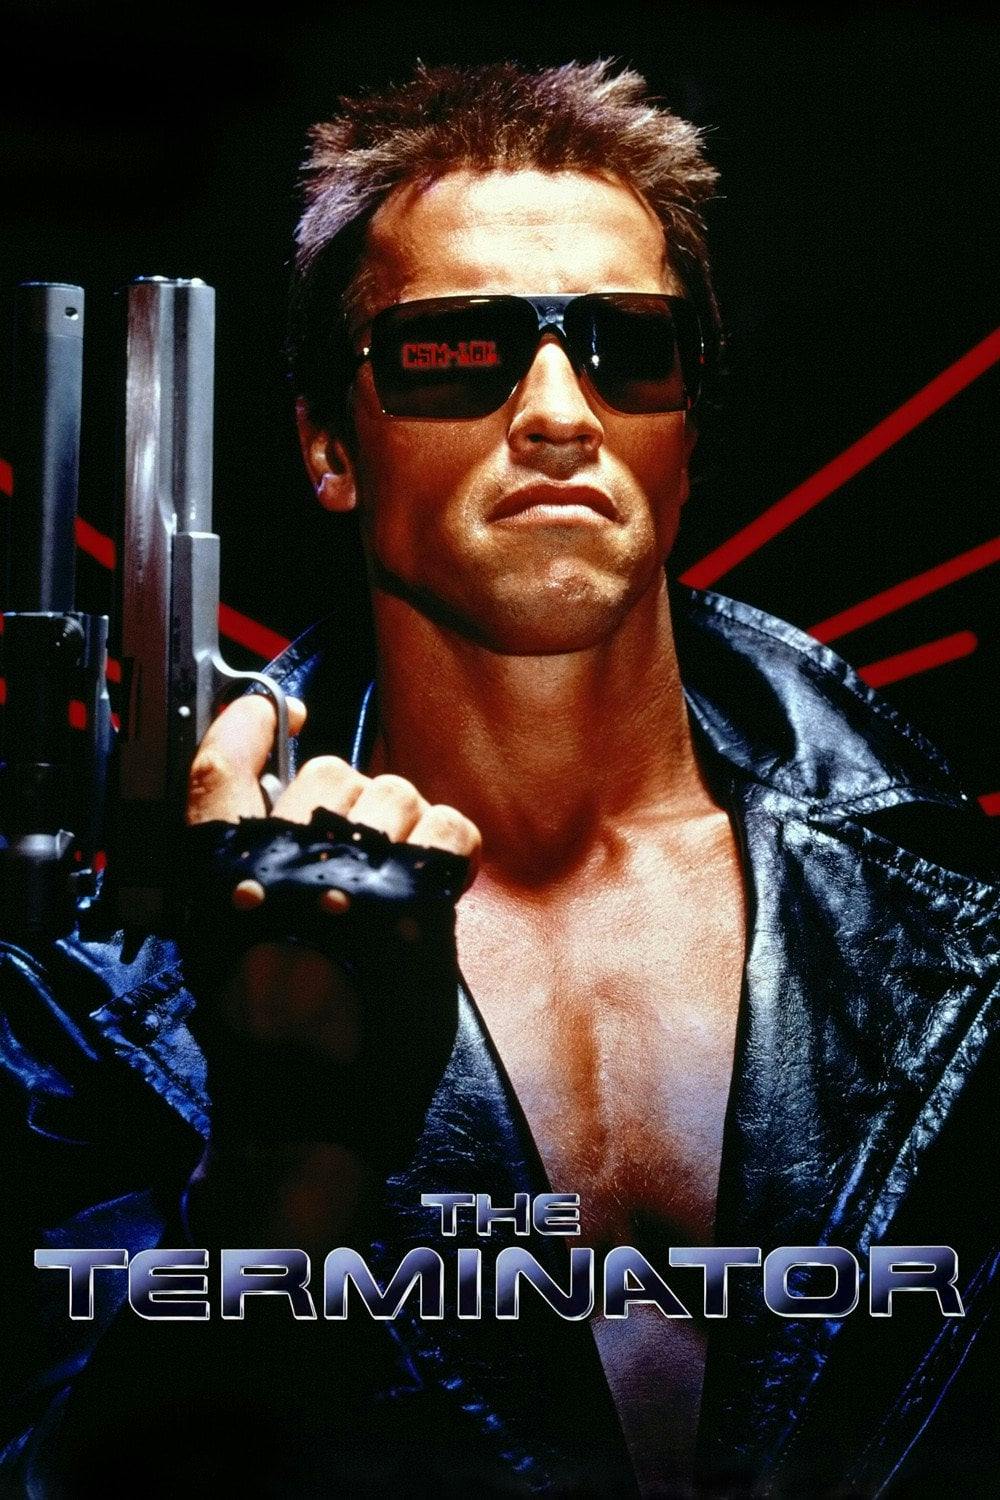 Best Arnold Schwarzenegger movies to watch on Amazon or iTunes